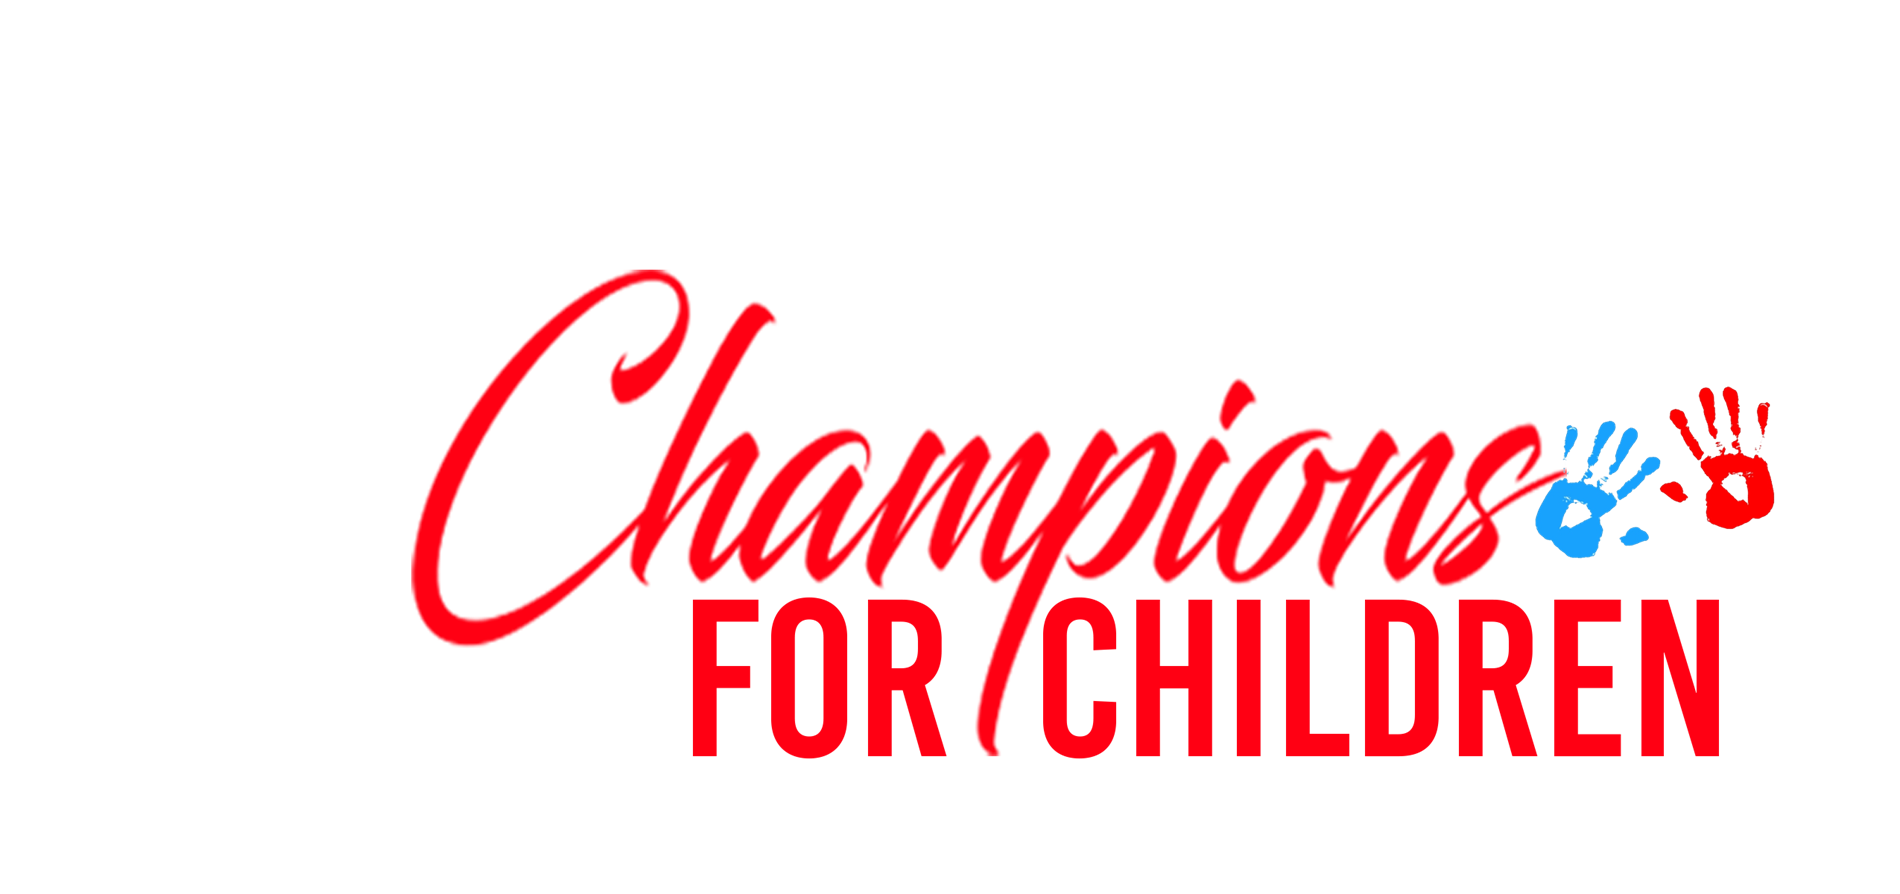 GLCSD Champions for Children